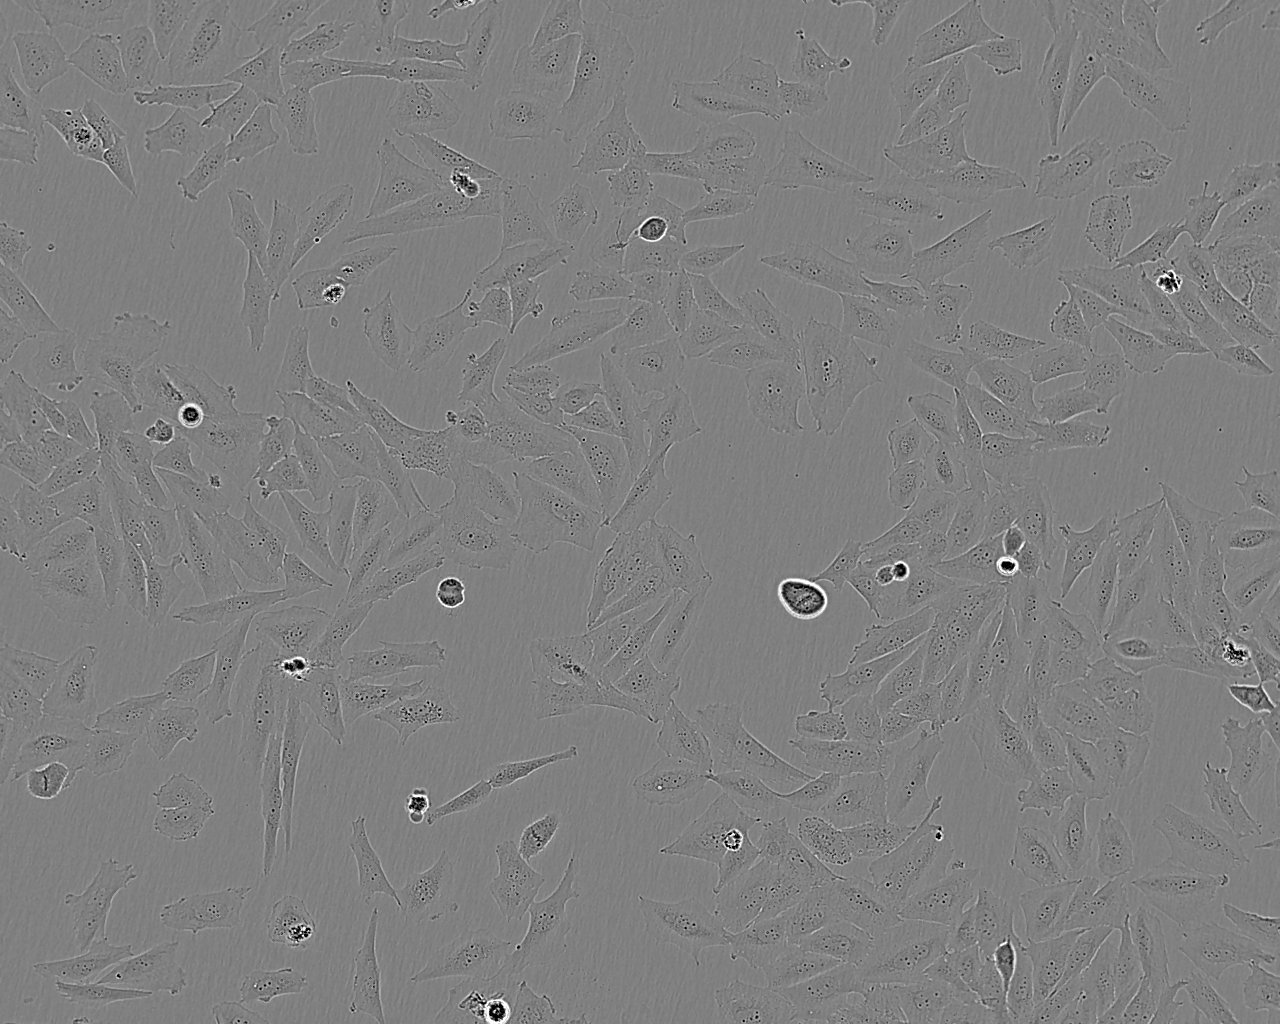 IB-RS-2 epithelioid cells猪肾细胞系,IB-RS-2 epithelioid cells